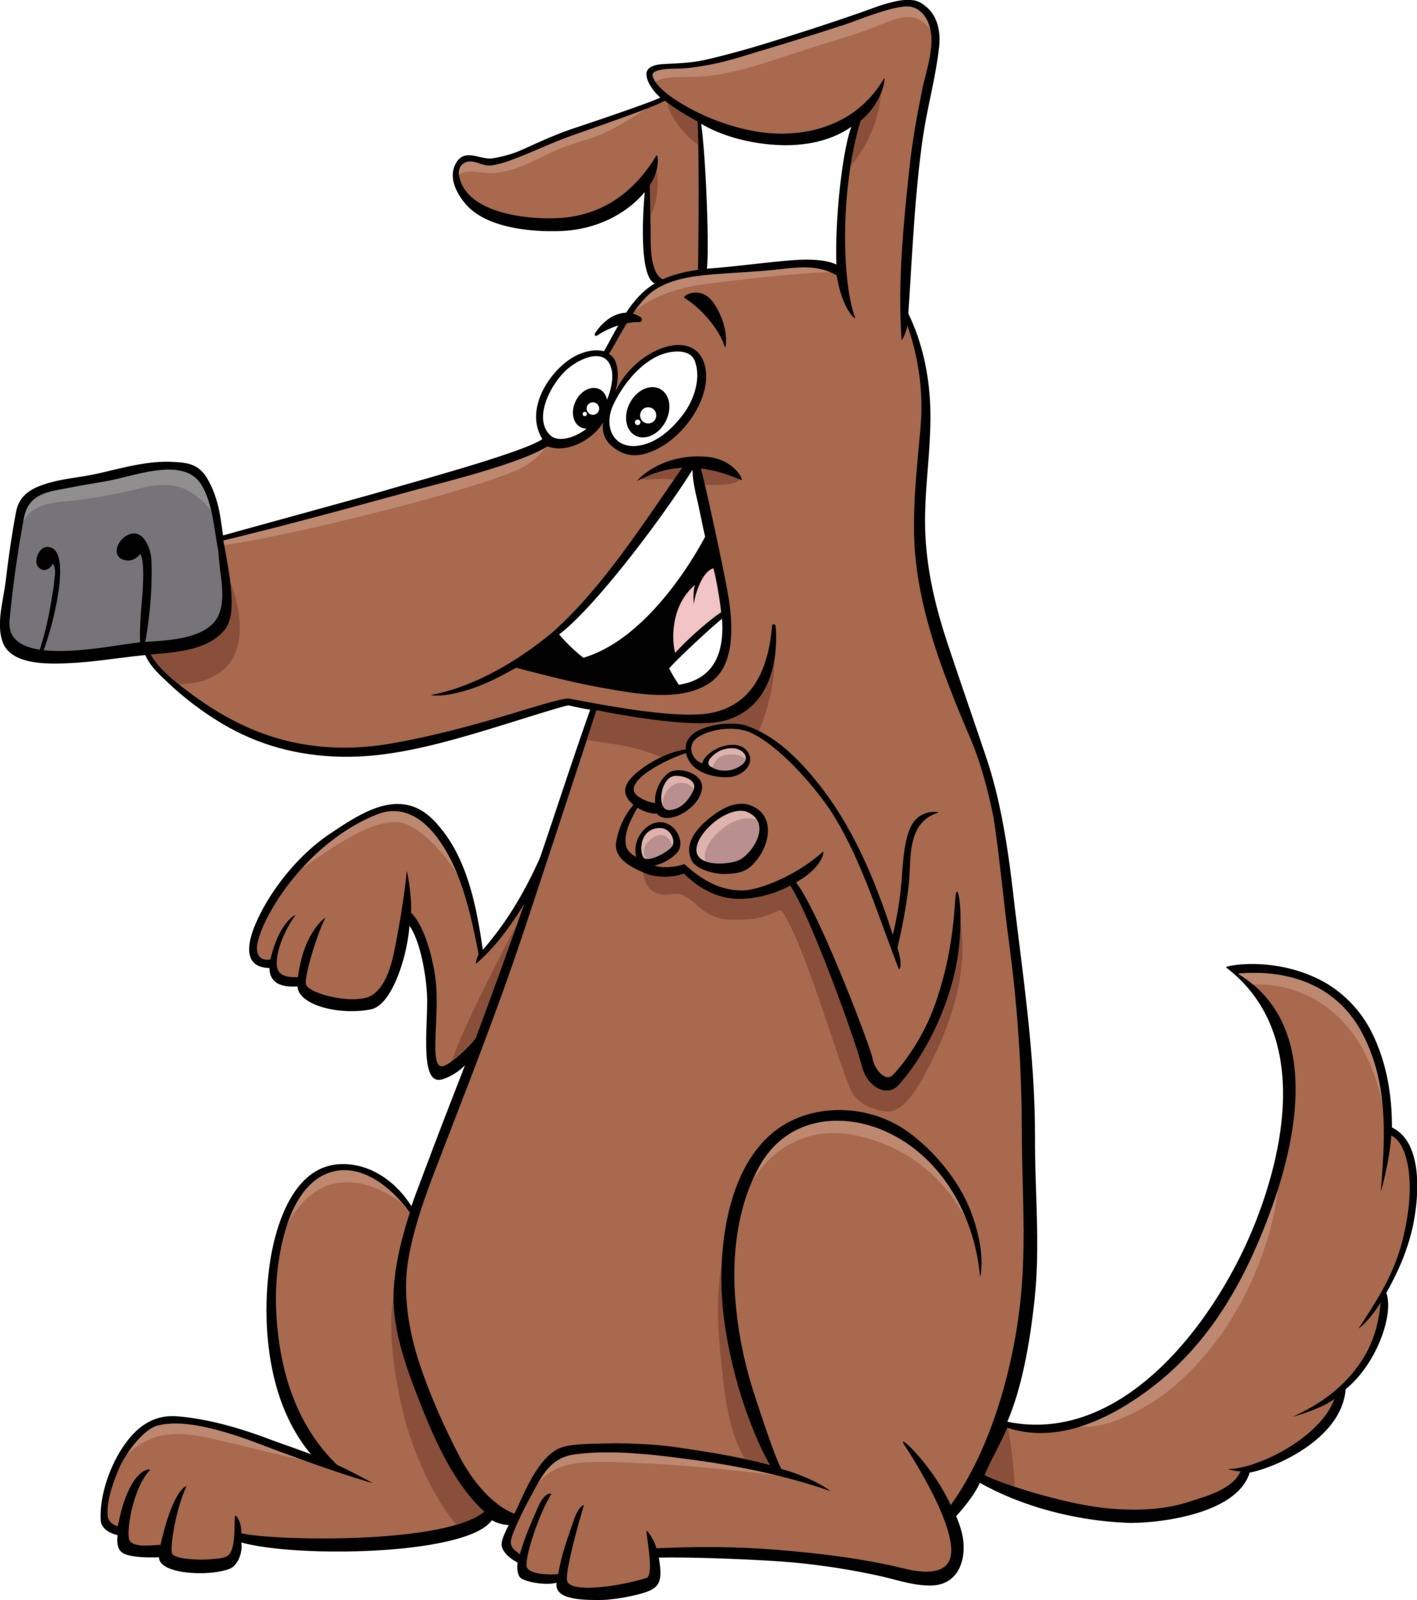 Cartoon Illustration of Funny Playful Brown Dog Comic Animal Character